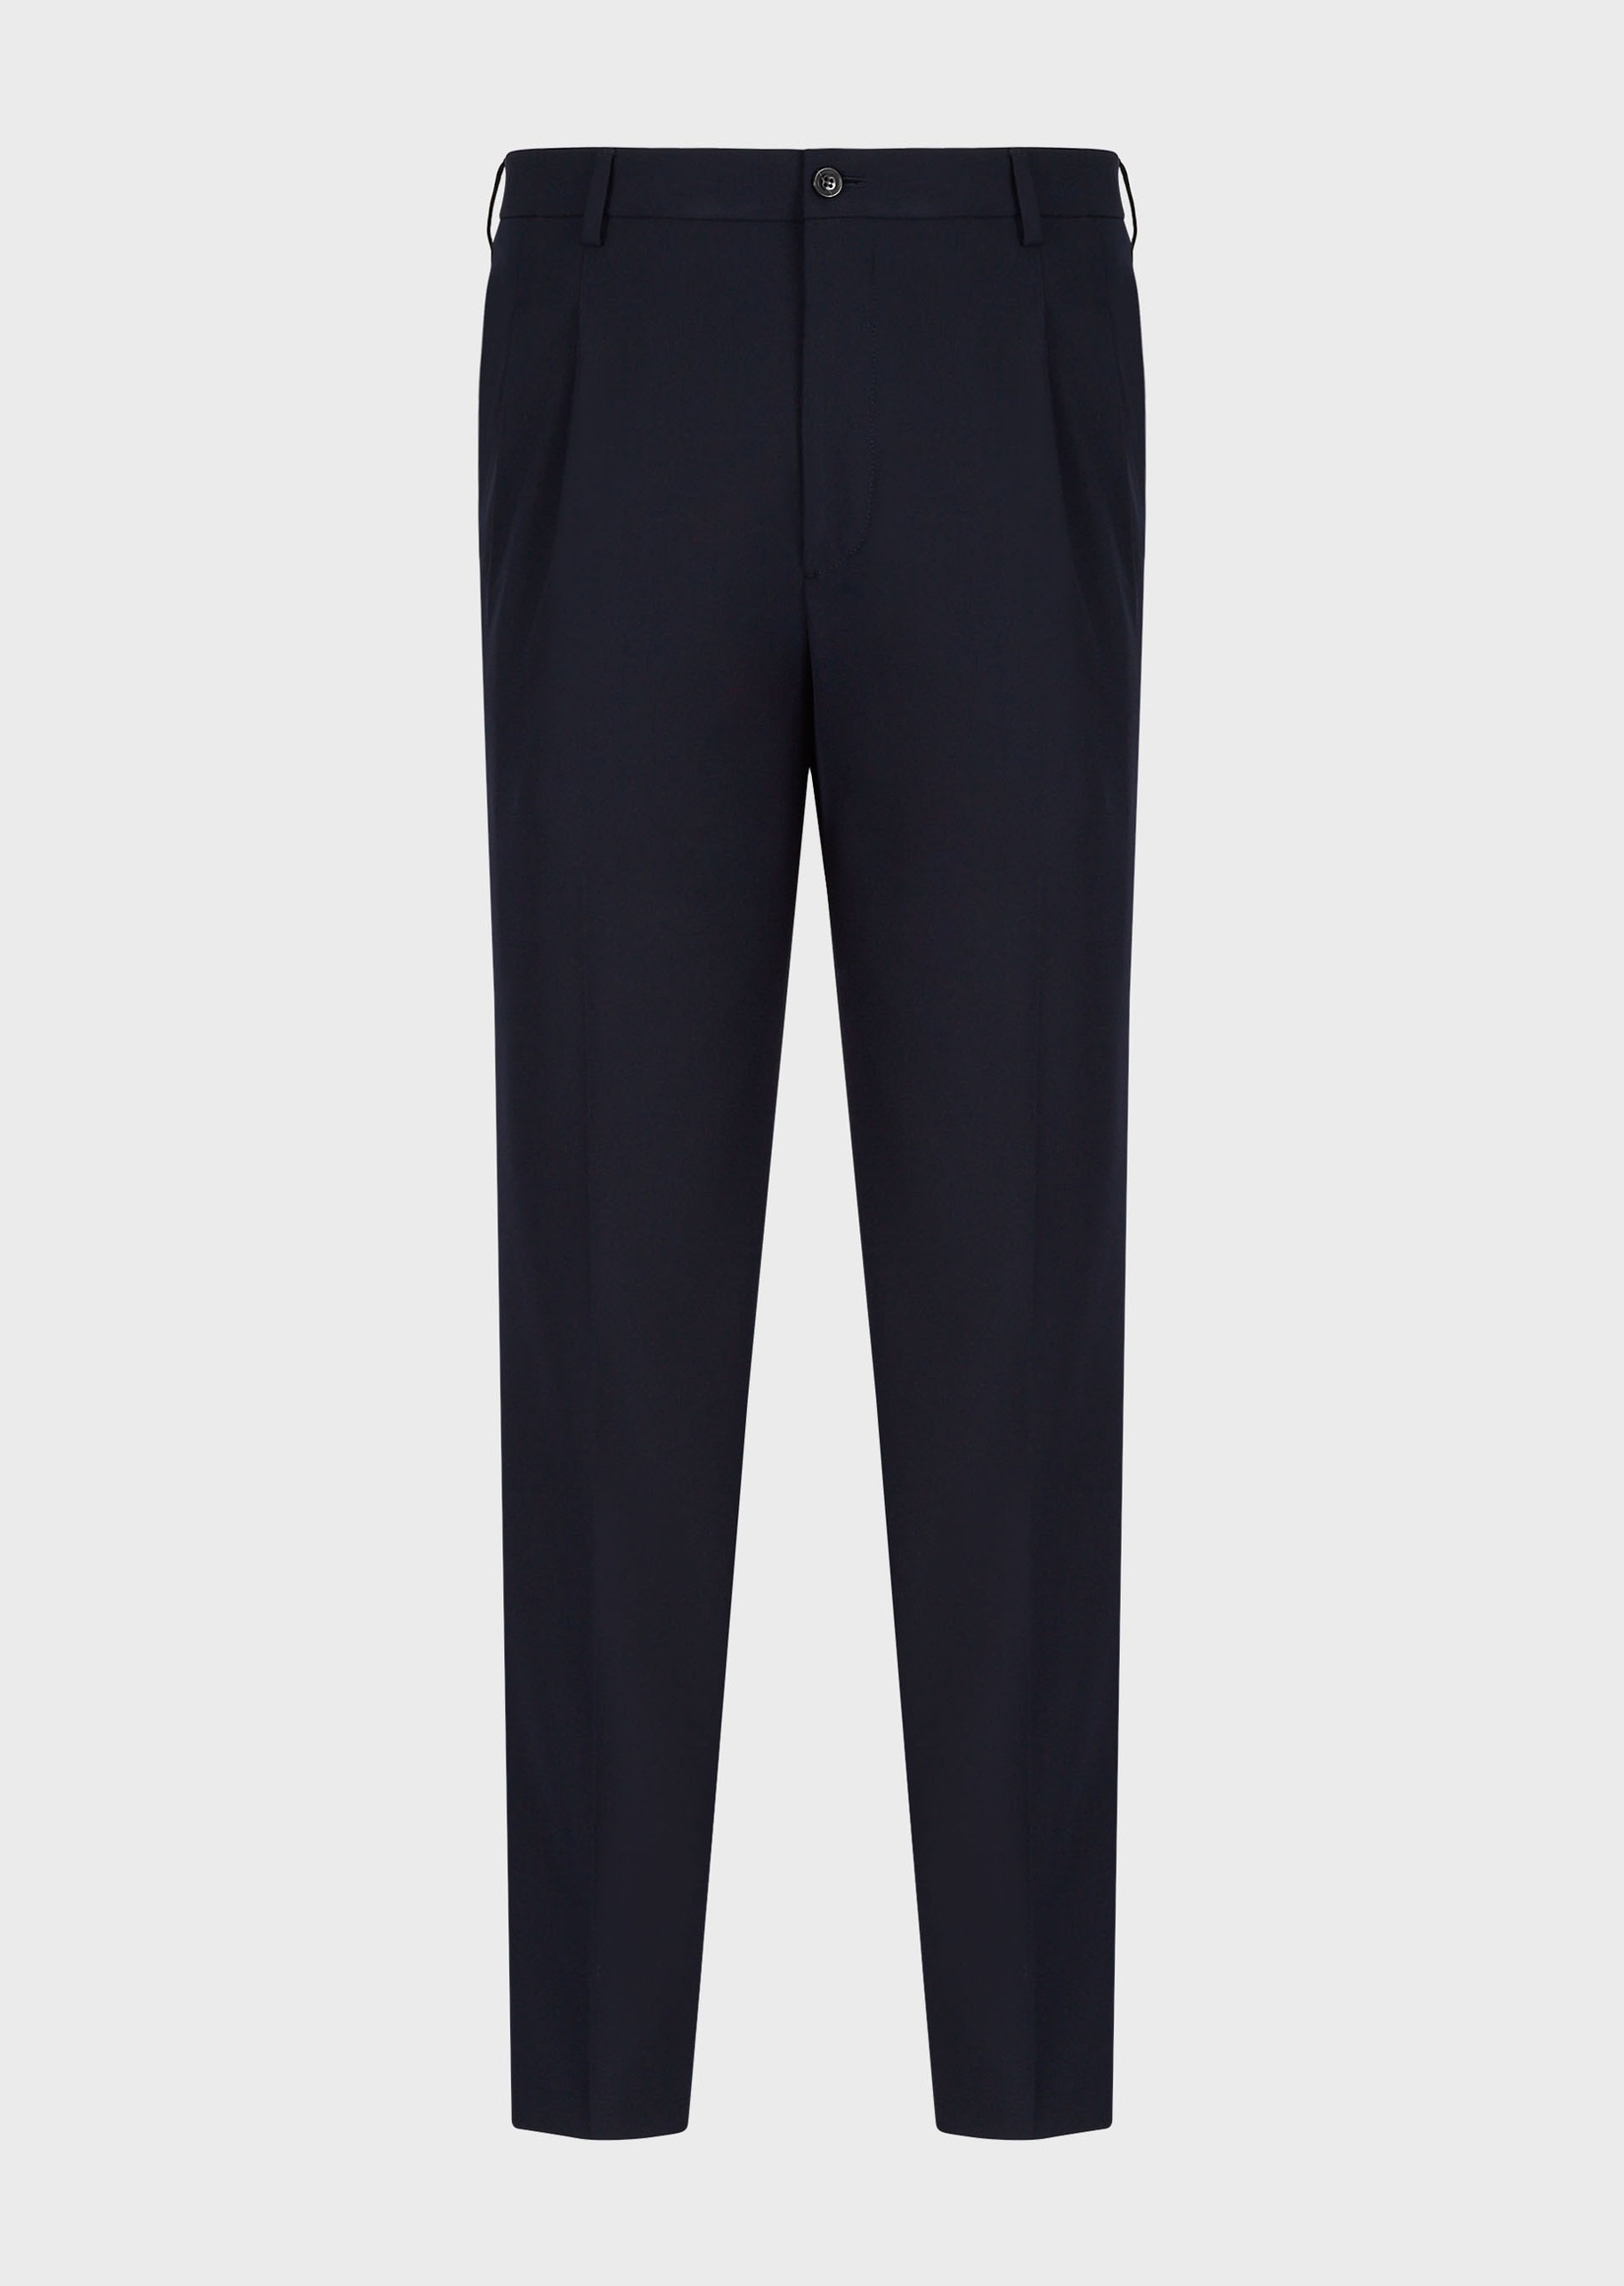 Giorgio Armani 男士商务正装纯色双褶裥直筒休闲西裤